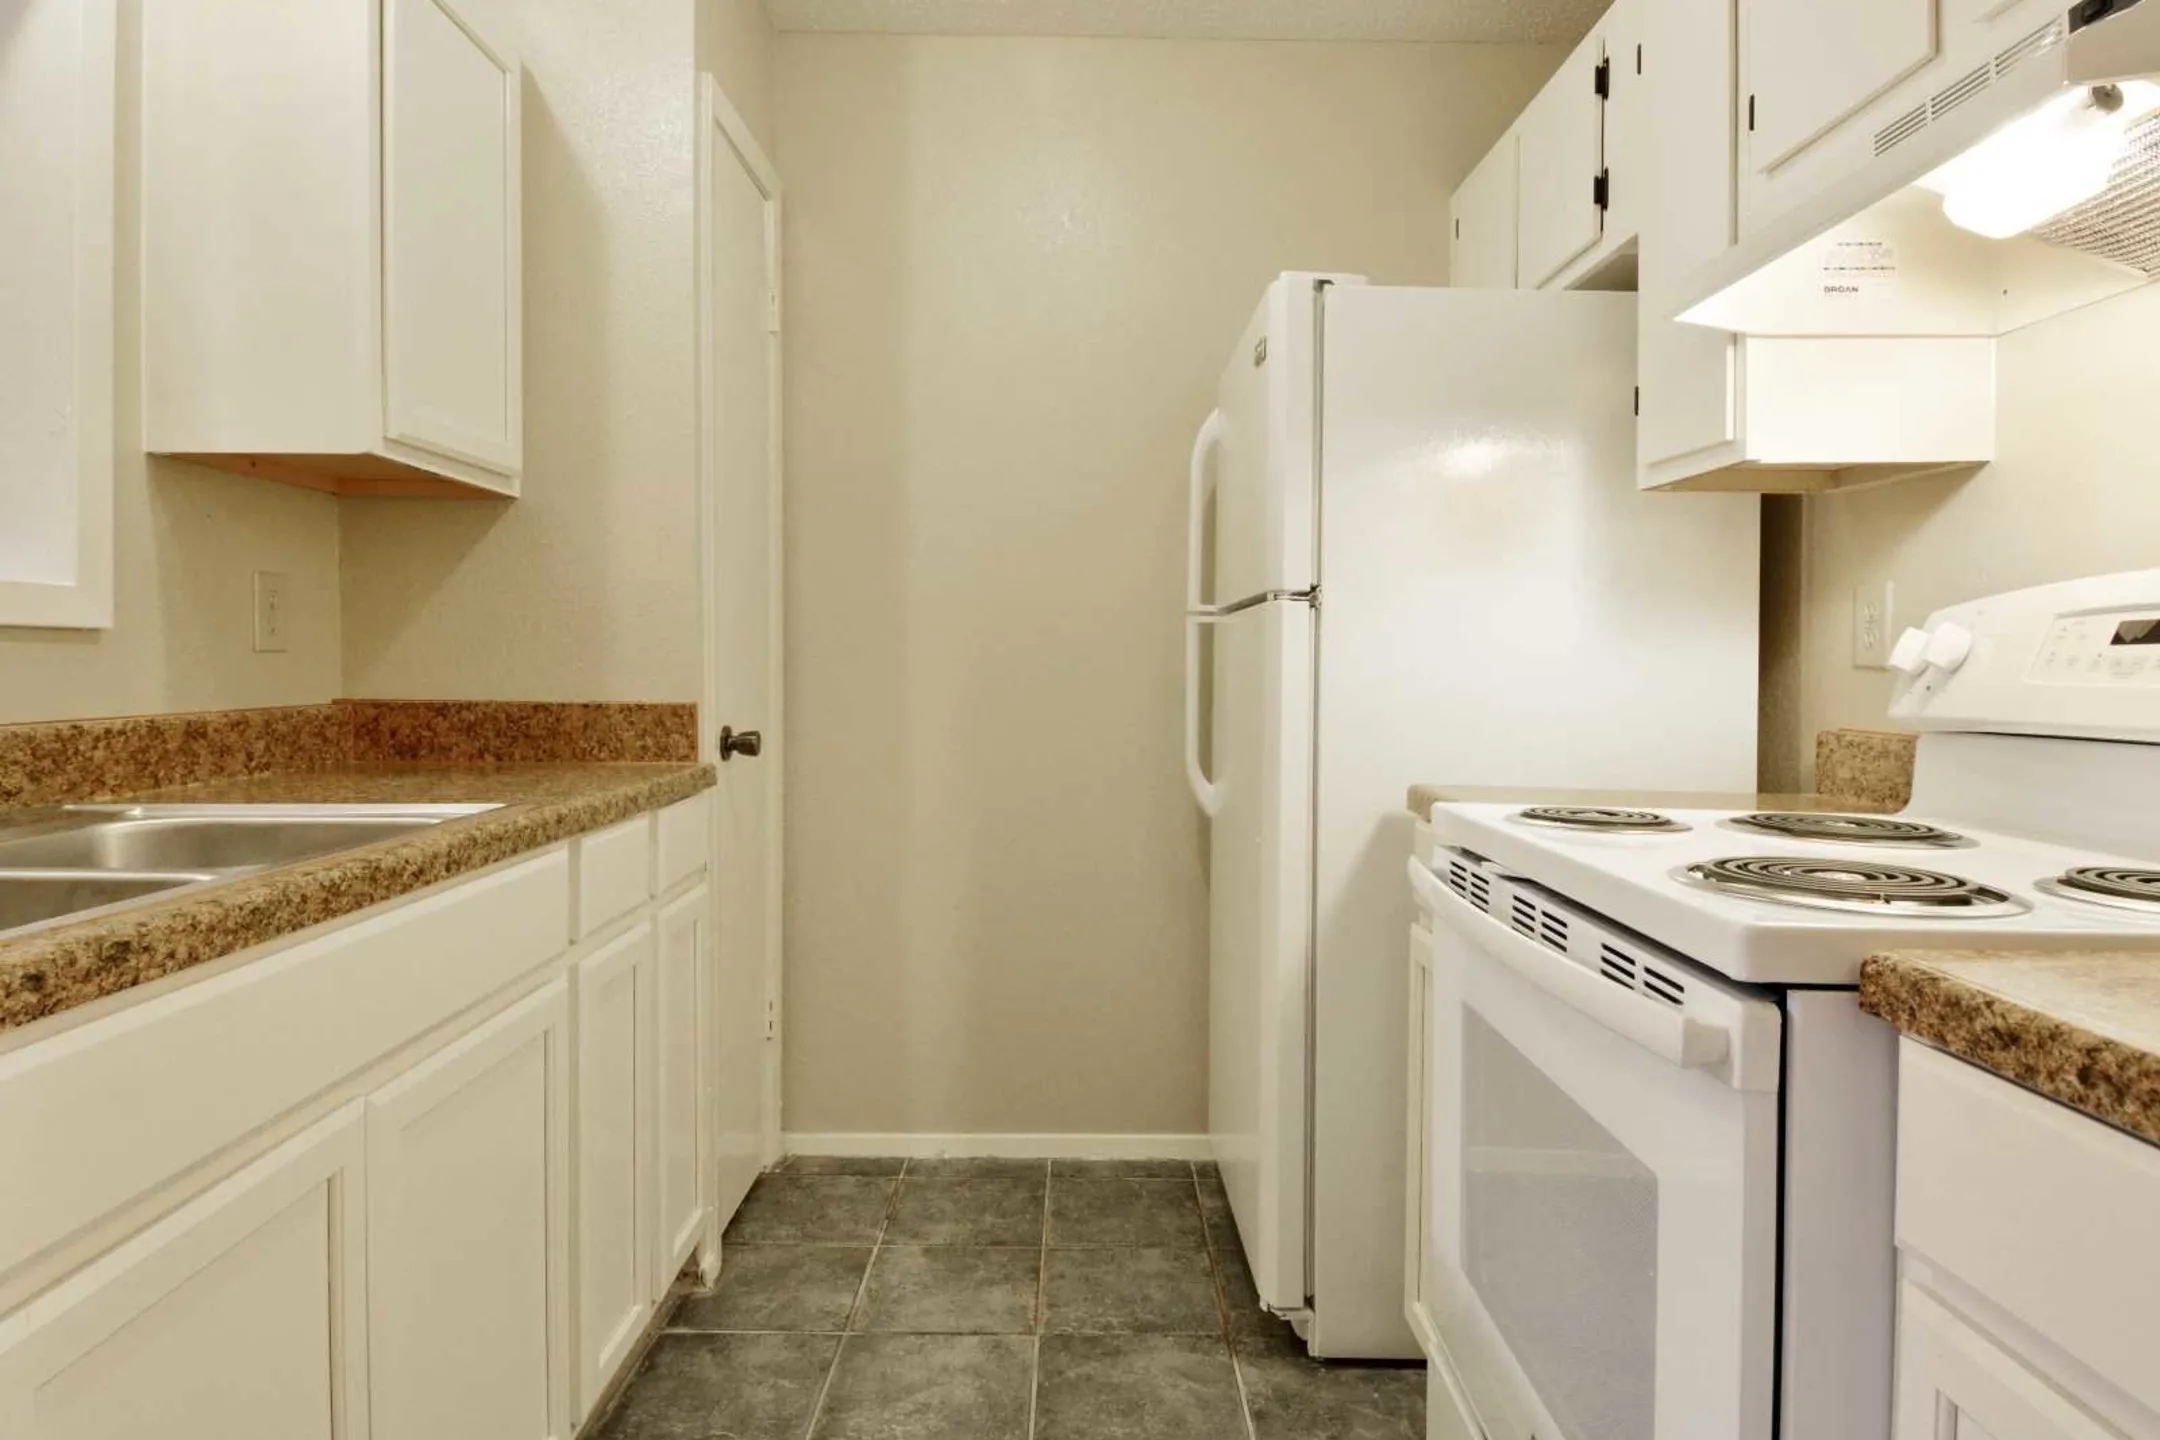 Kitchen - Crossings Apartments - McAllen, TX